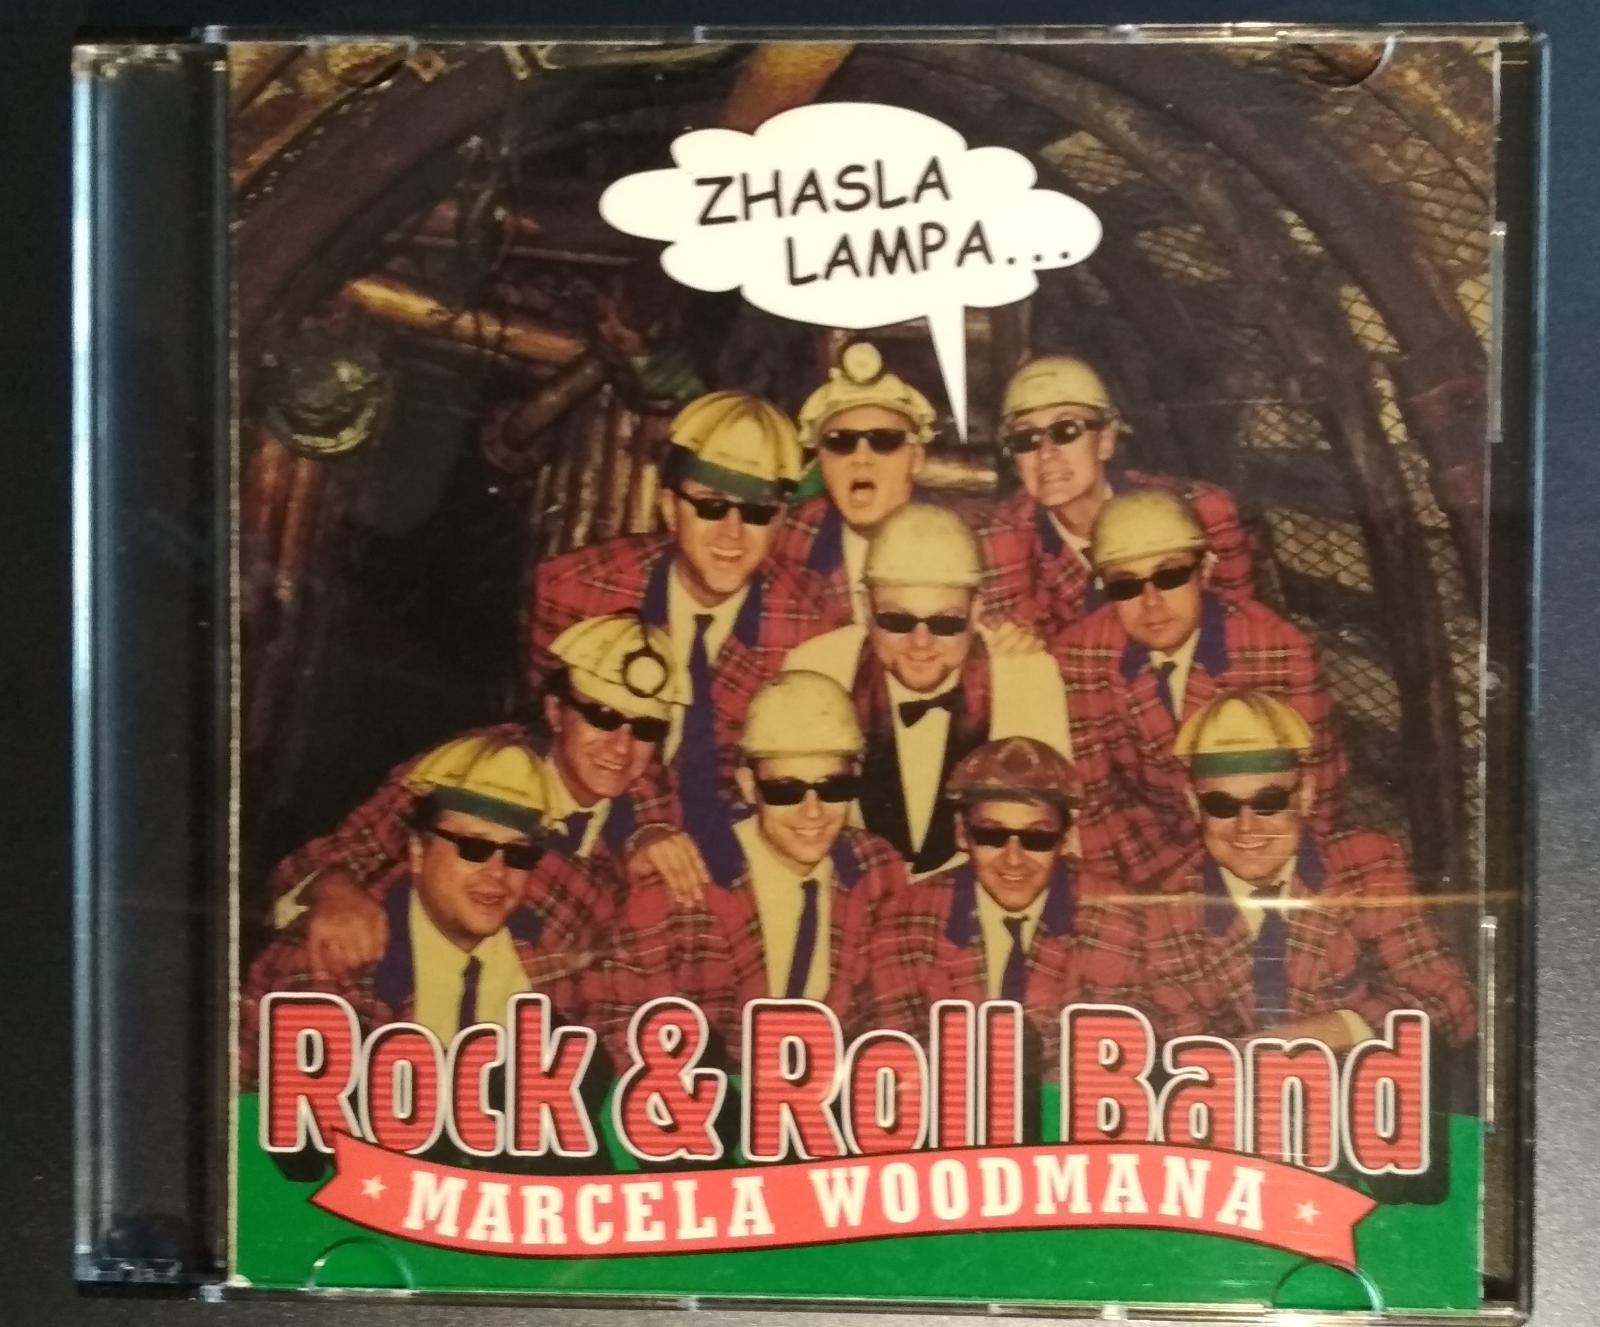 CD Rock & Roll Band Marcela Woodmana - Zhasla lampa -banícka tematika - Zberateľstvo